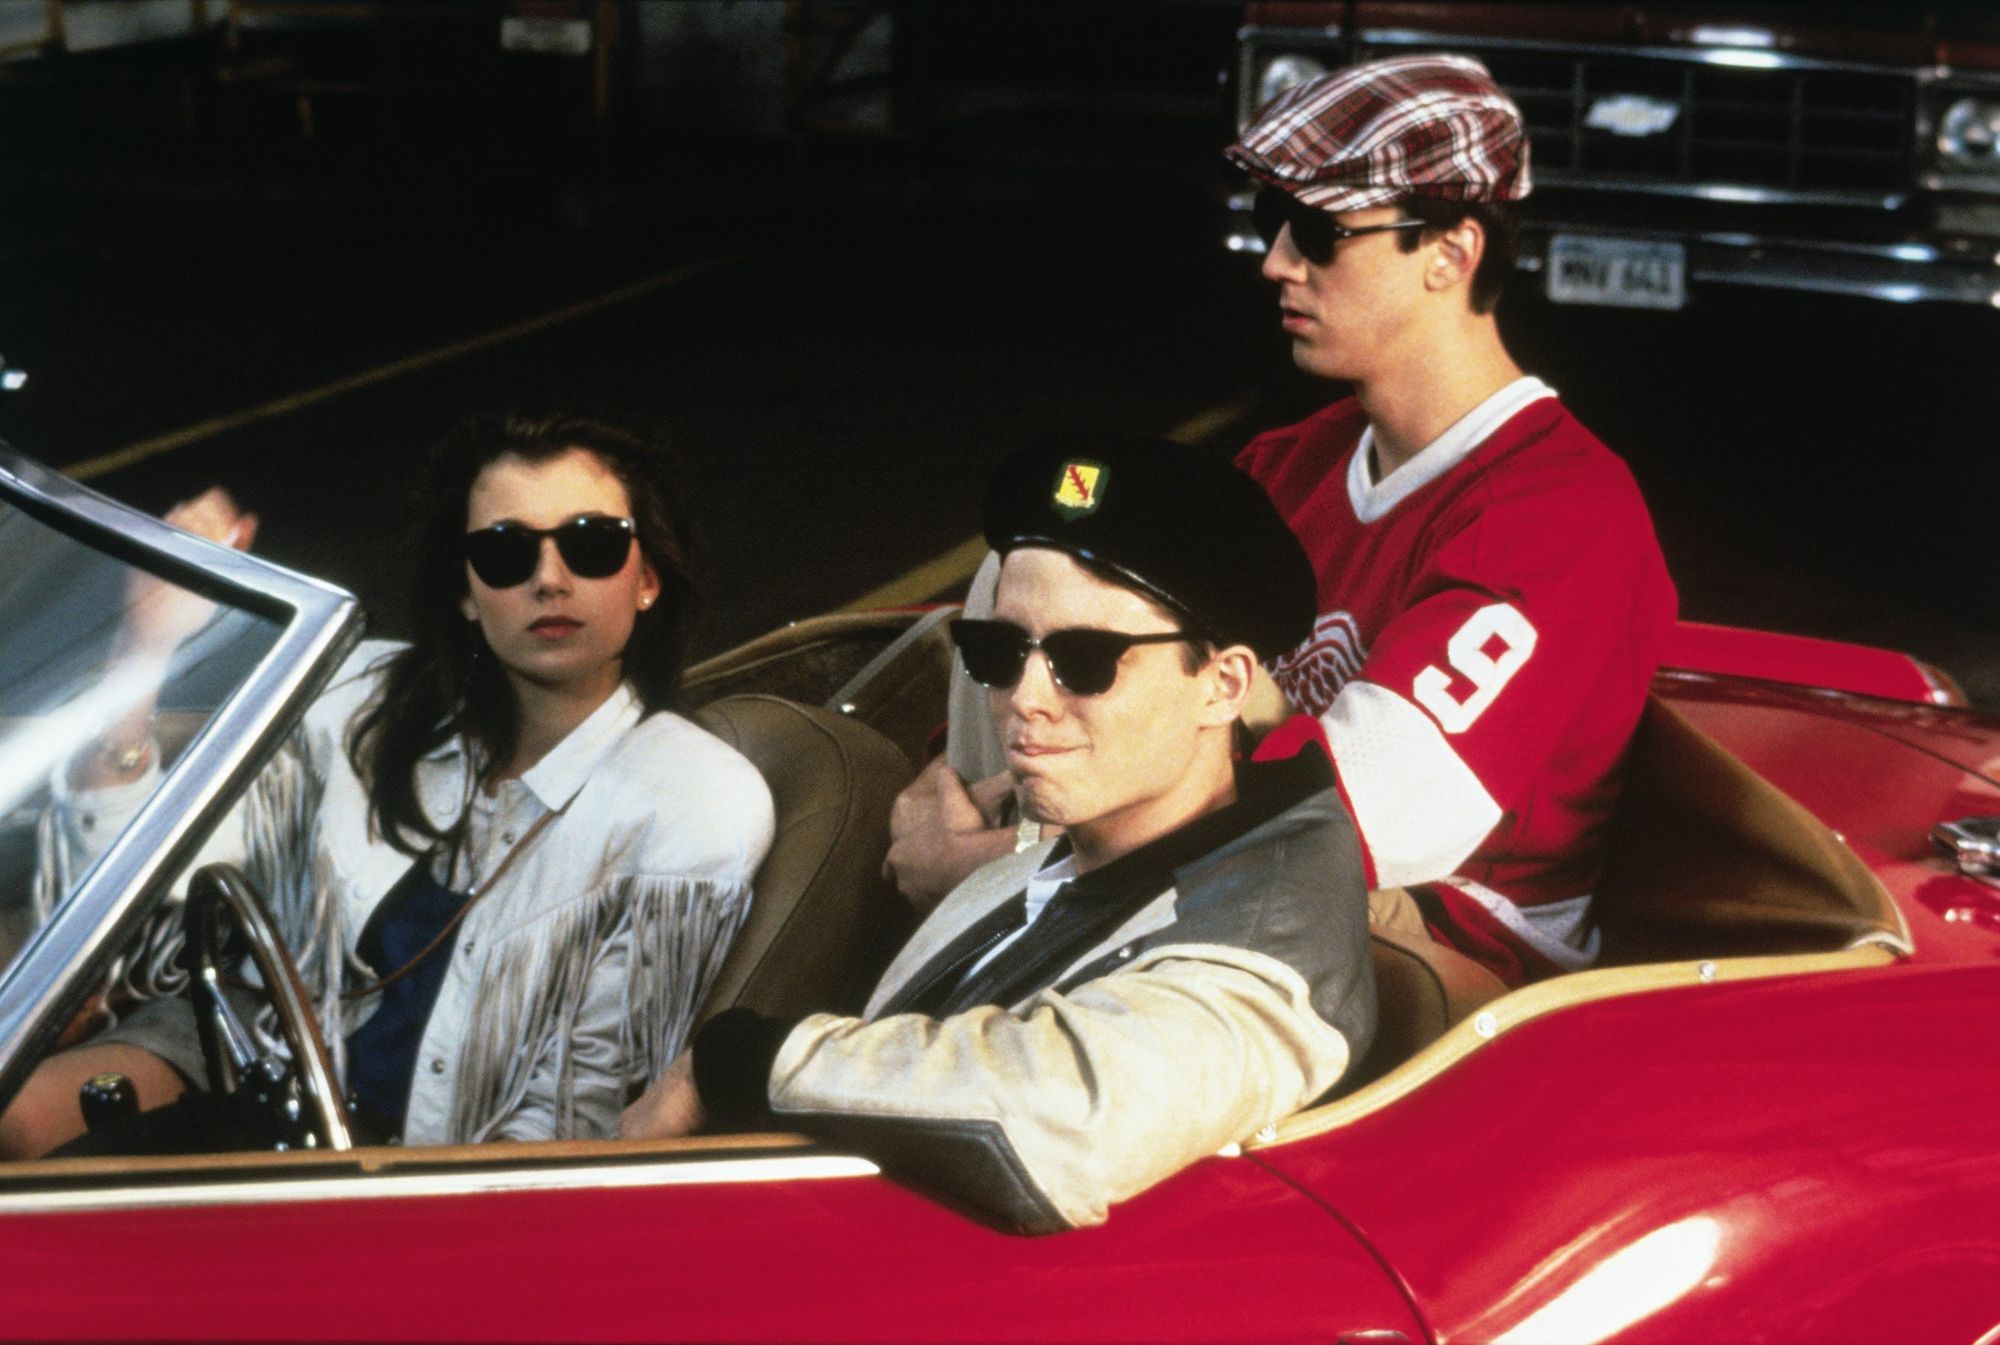 Episode 107 - Ferris Bueller's Day Off (1986)